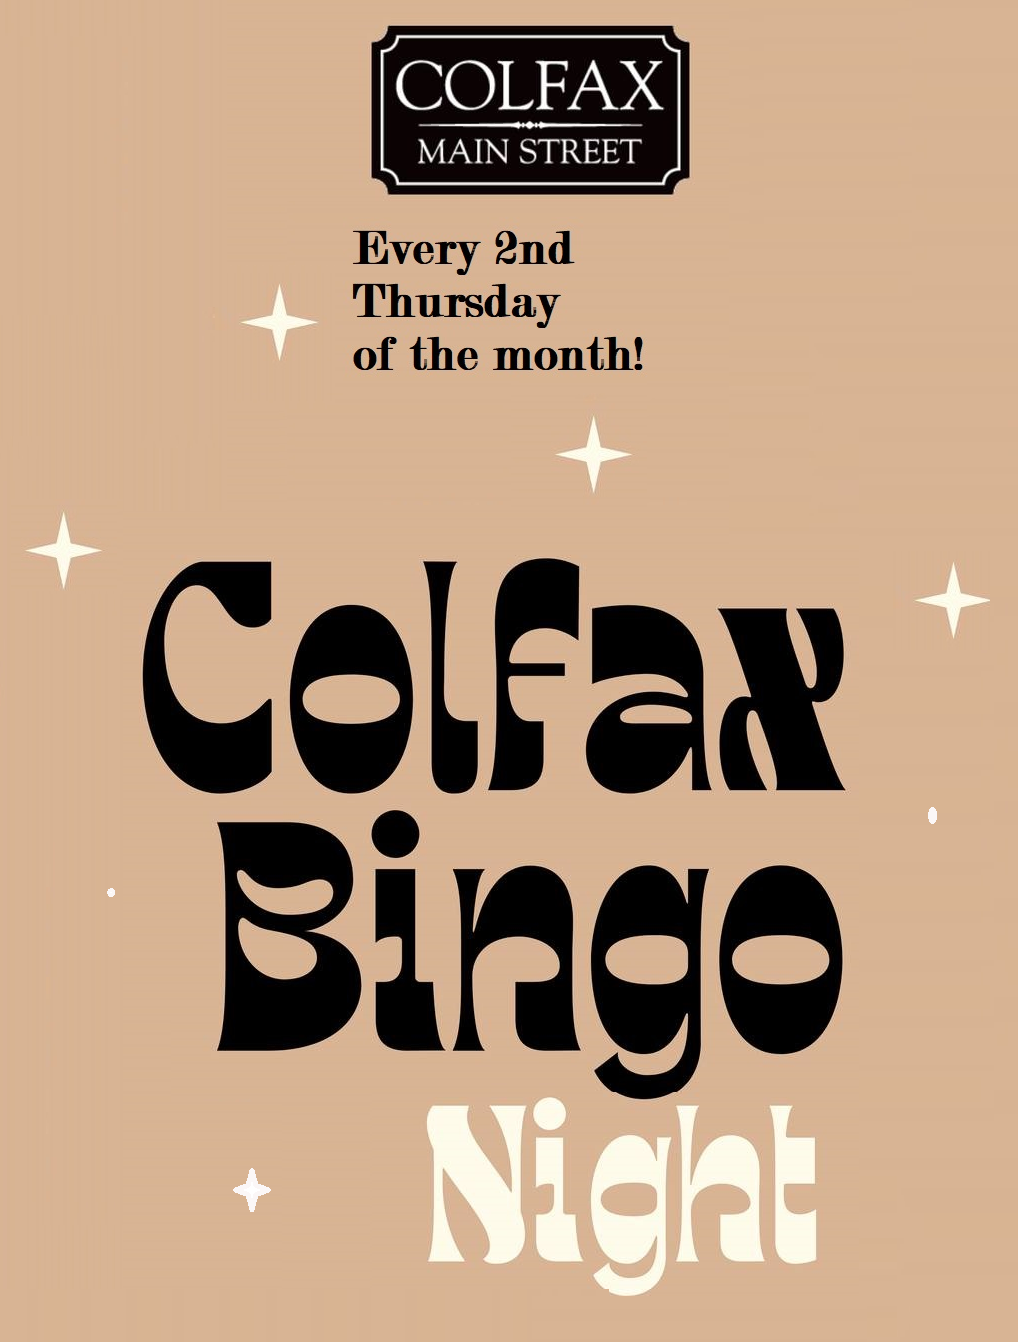 Event Promo Photo For Colfax Bingo Night